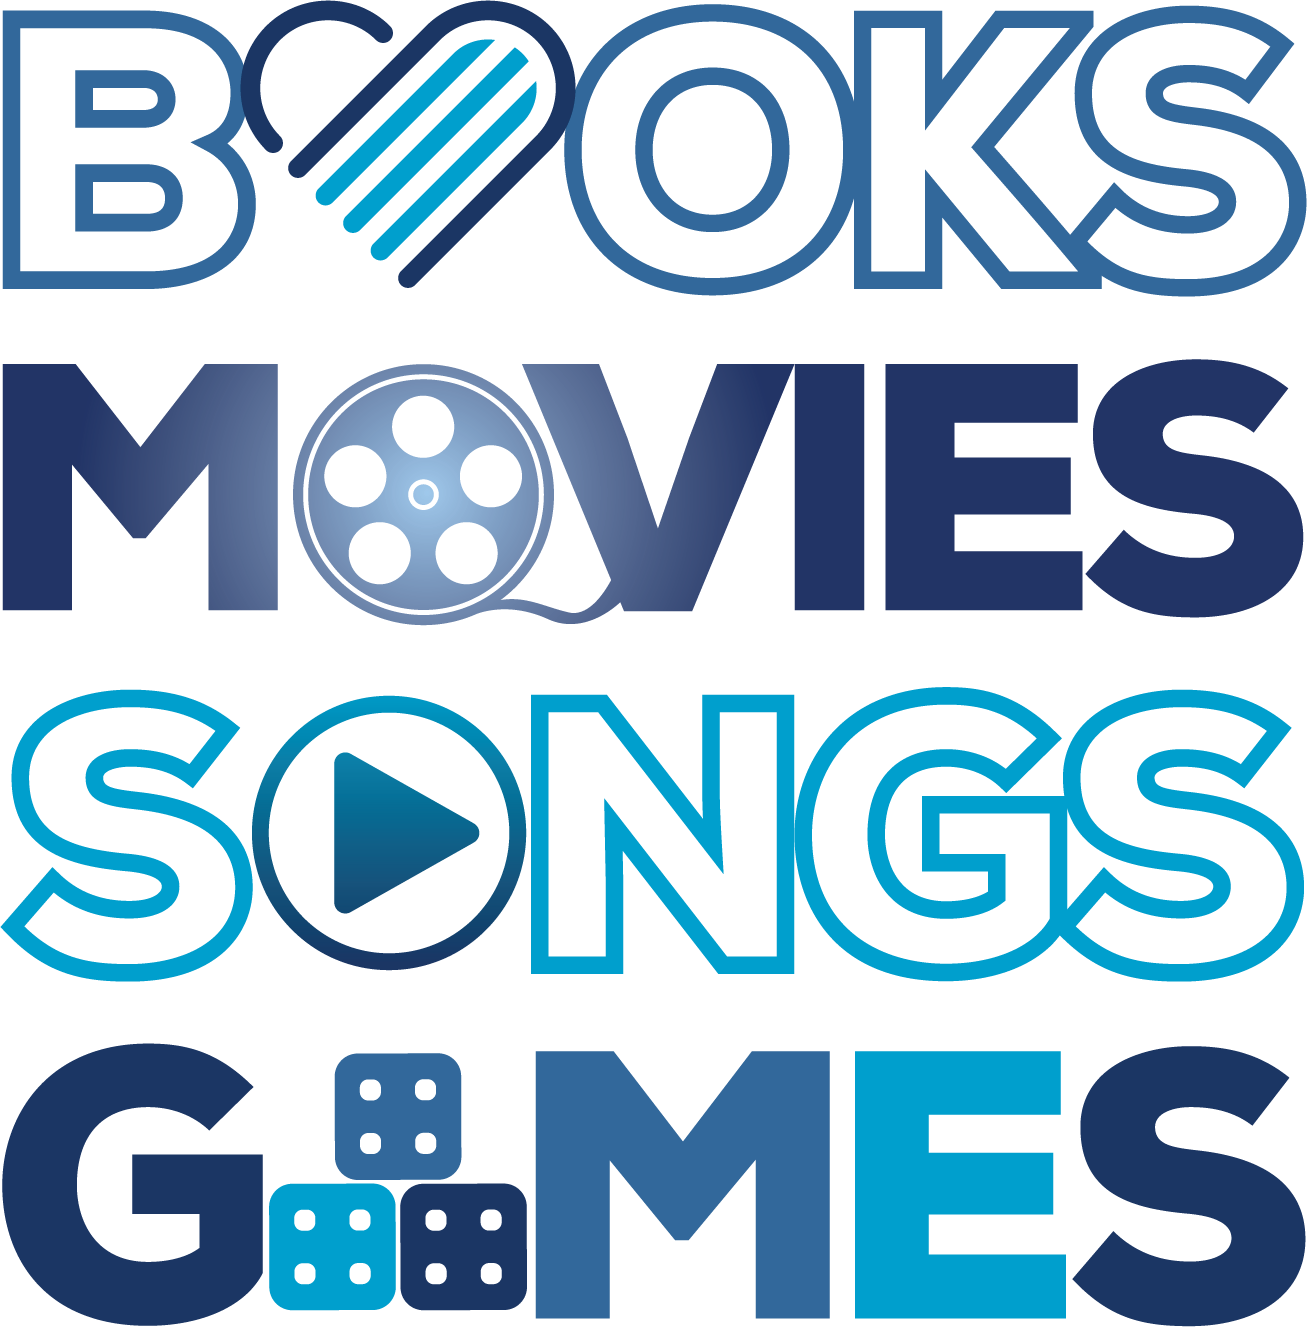 Books_movies